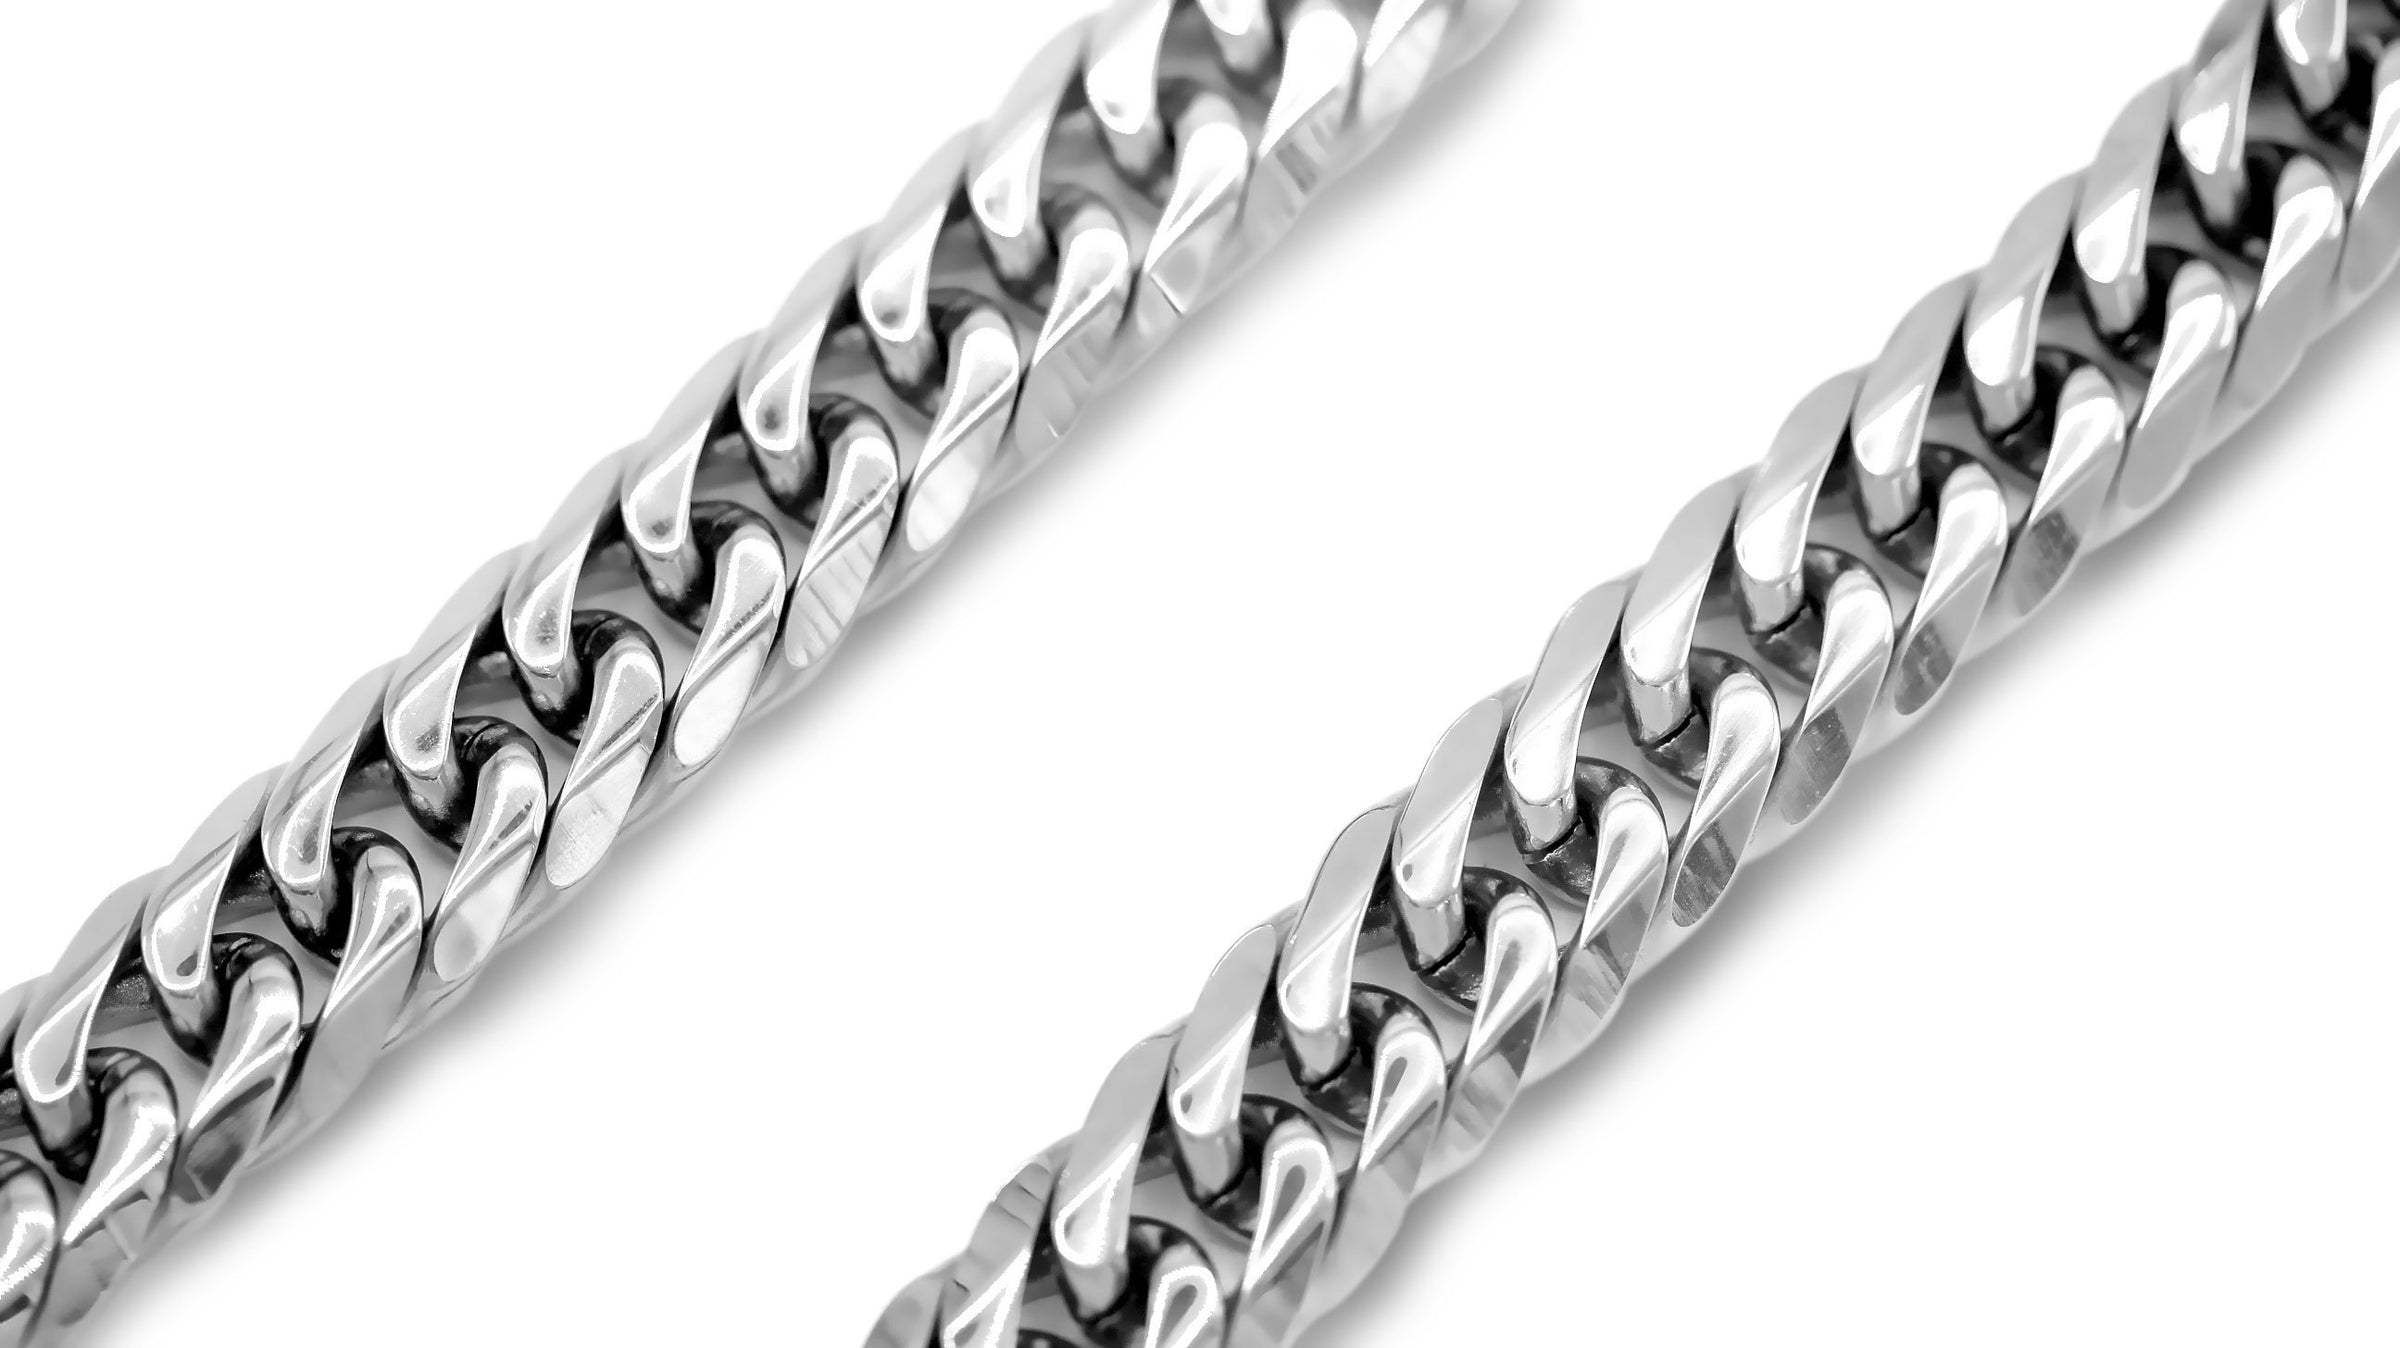 Miami Cuban Link Silver Necklace Double Link